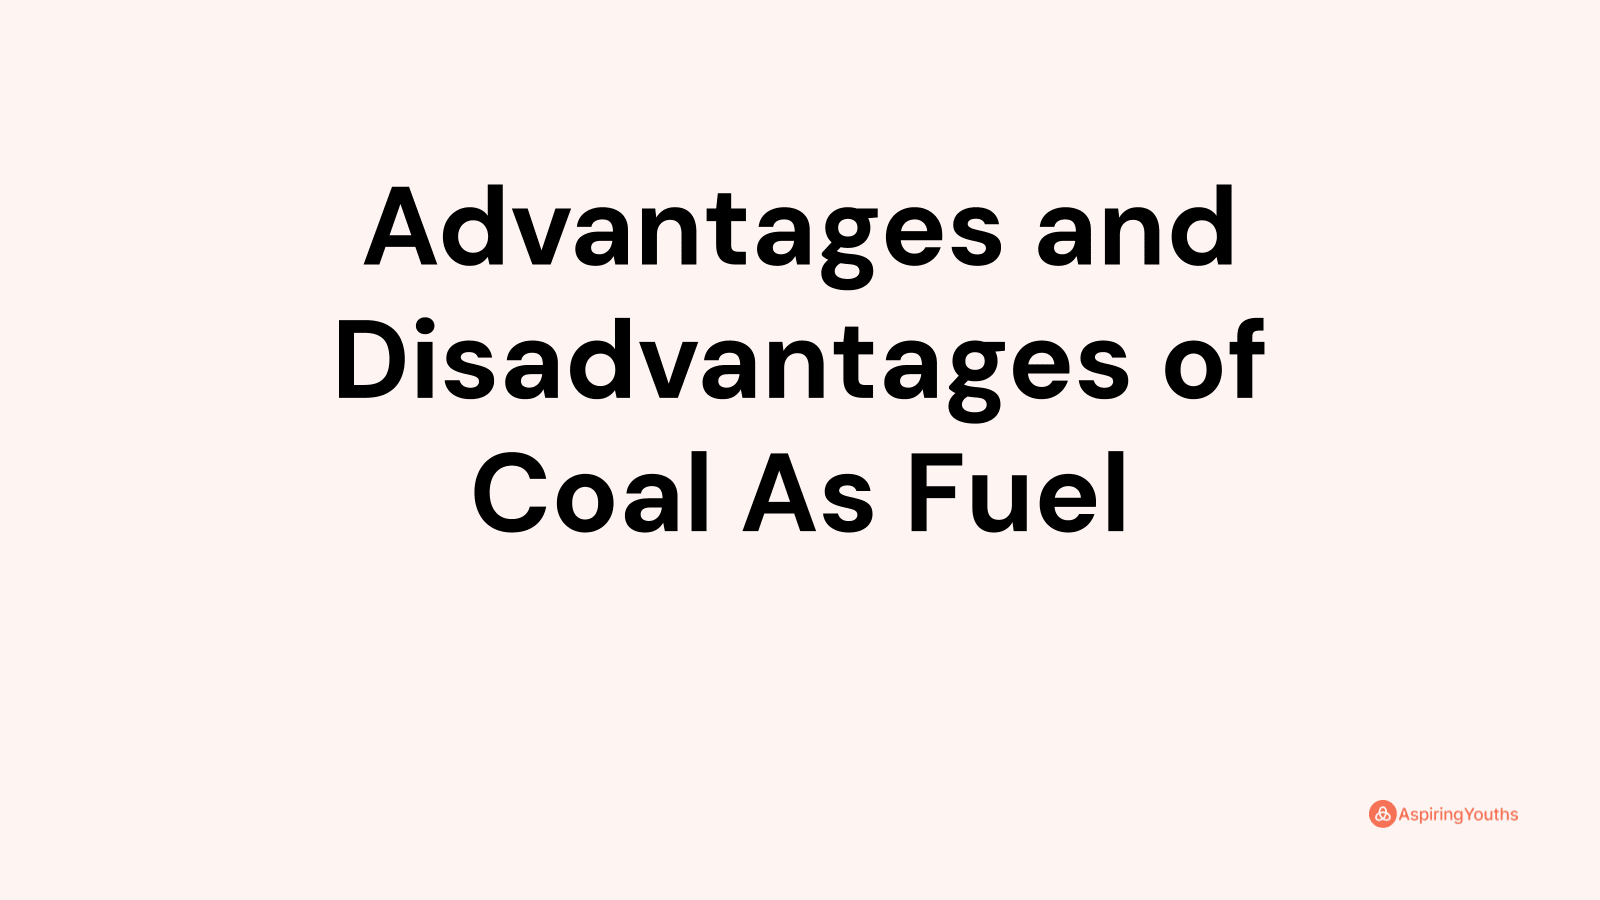 Advantages and disadvantages of Coal As Fuel